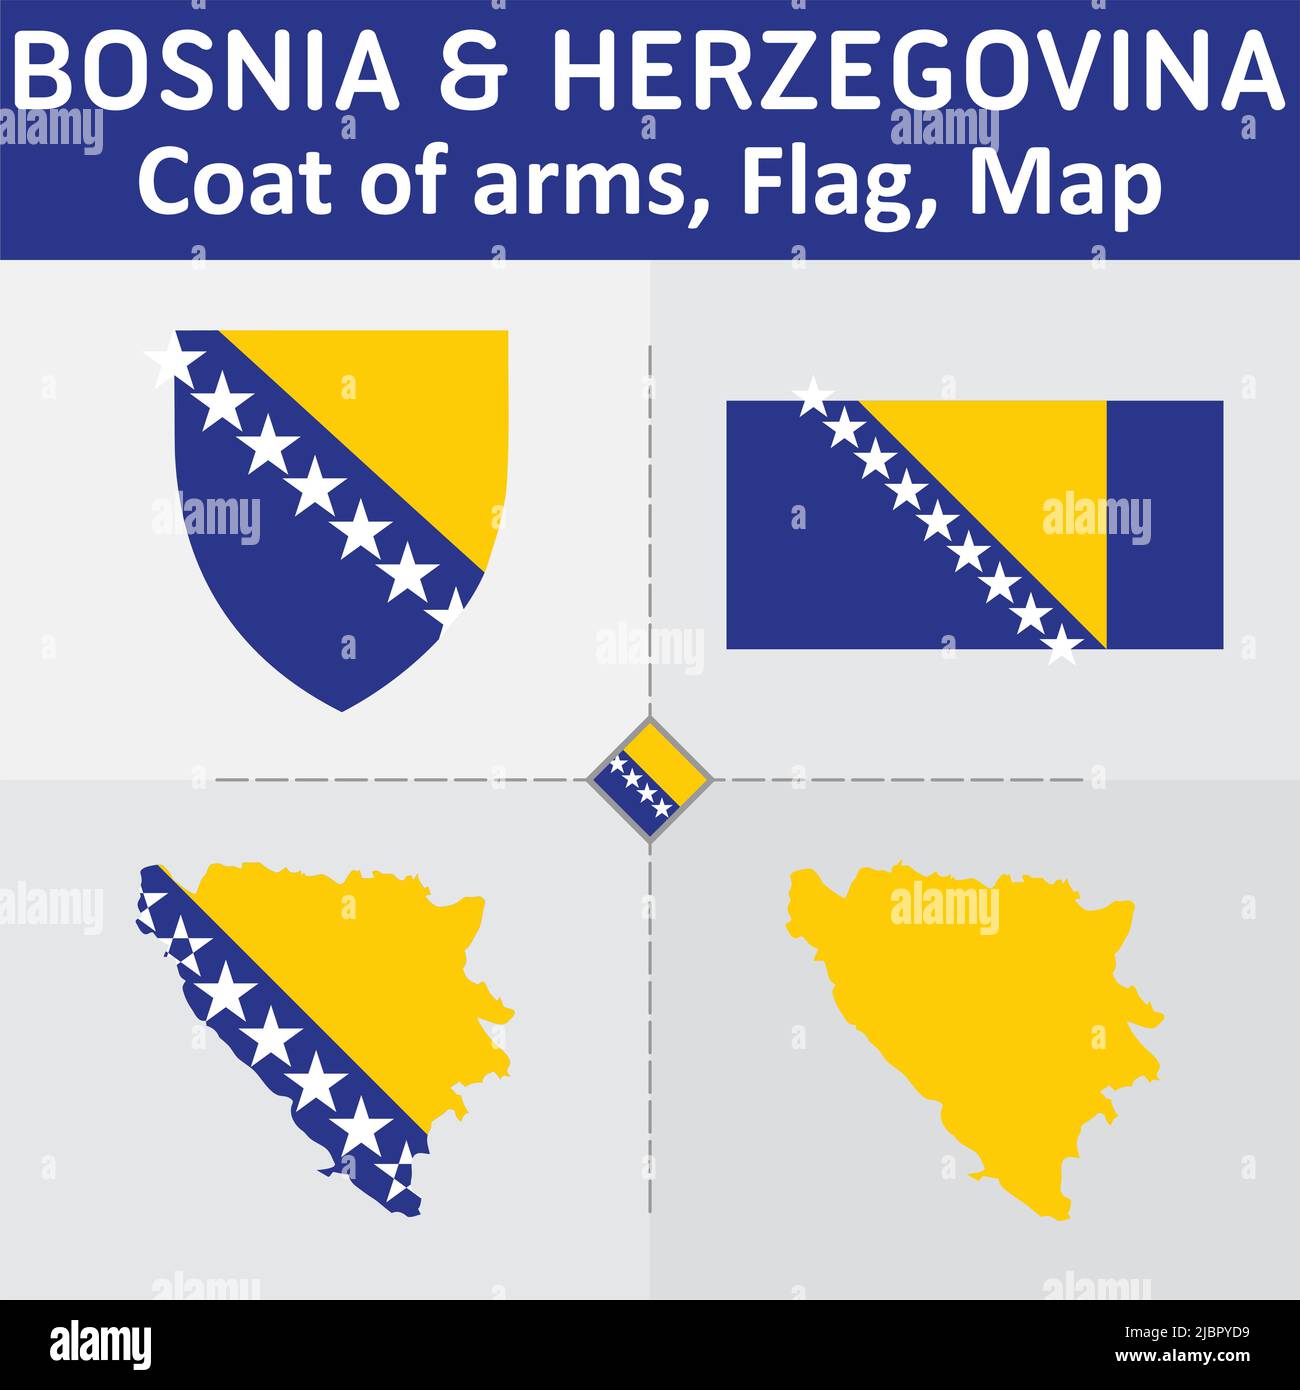 Bosnia & Herzegovina Coat of Arms, Flag and Map Stock Vector